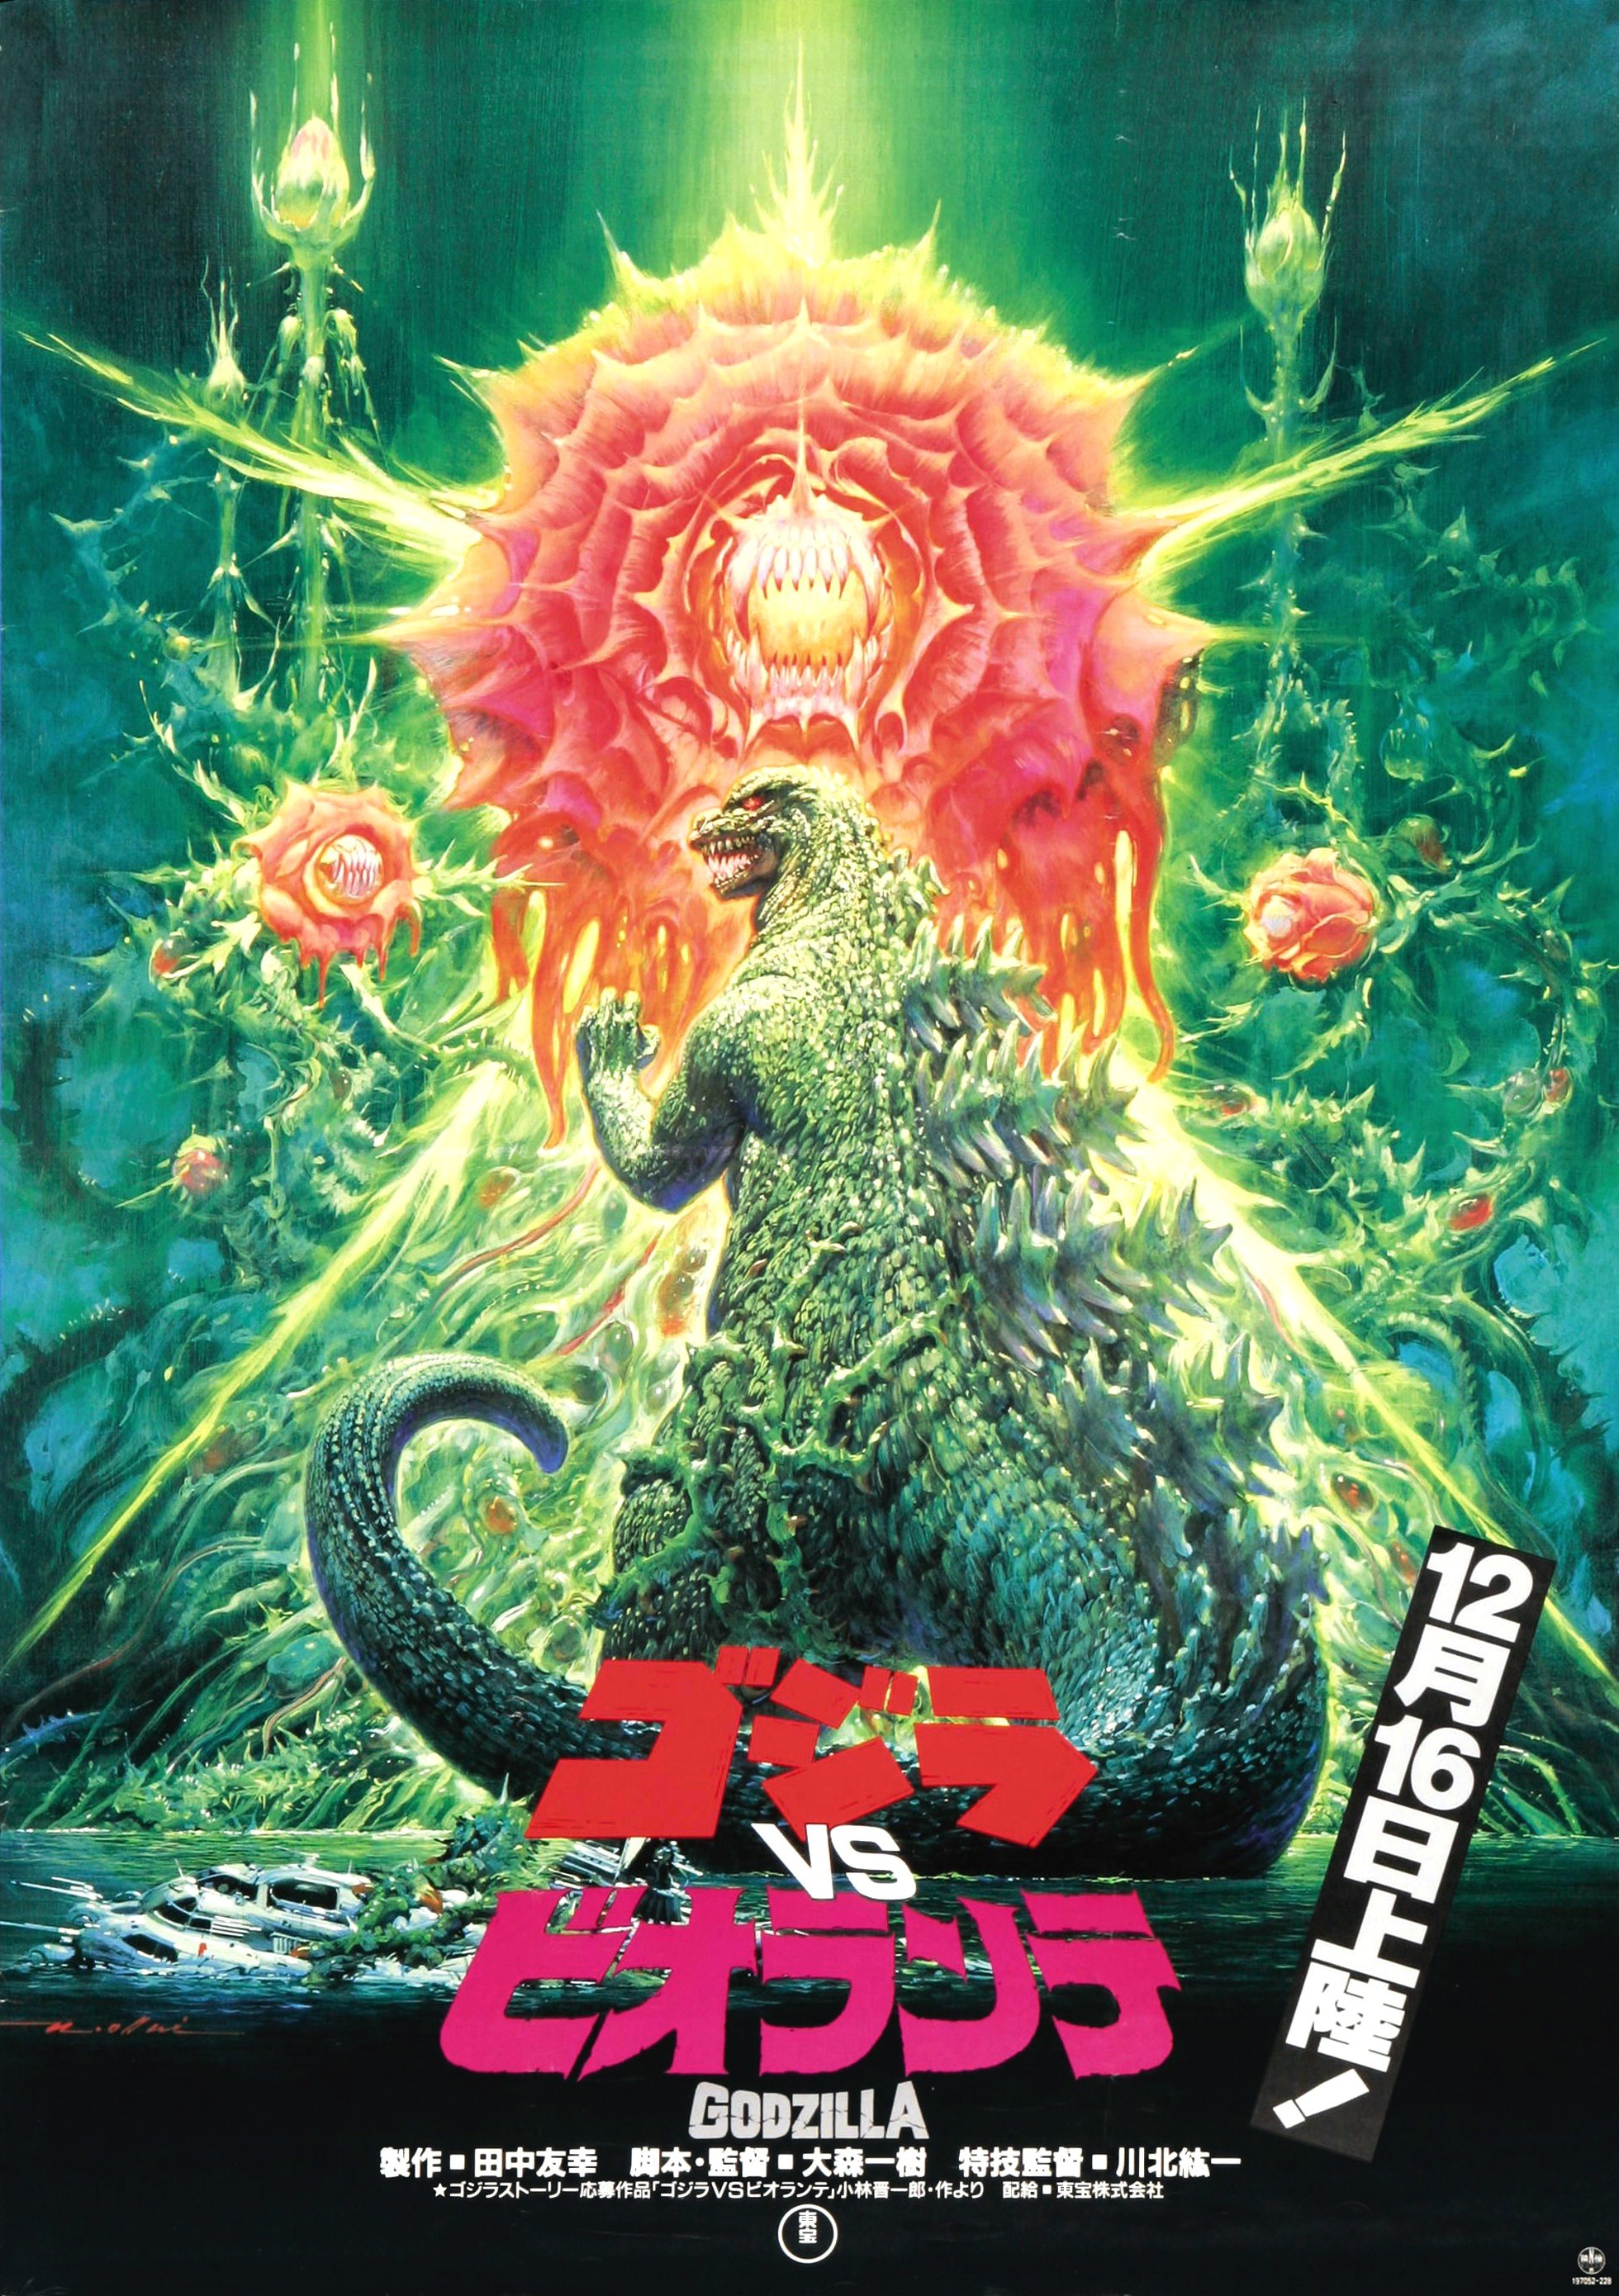 General 1960x2780 Godzilla movie poster vintage movies creature